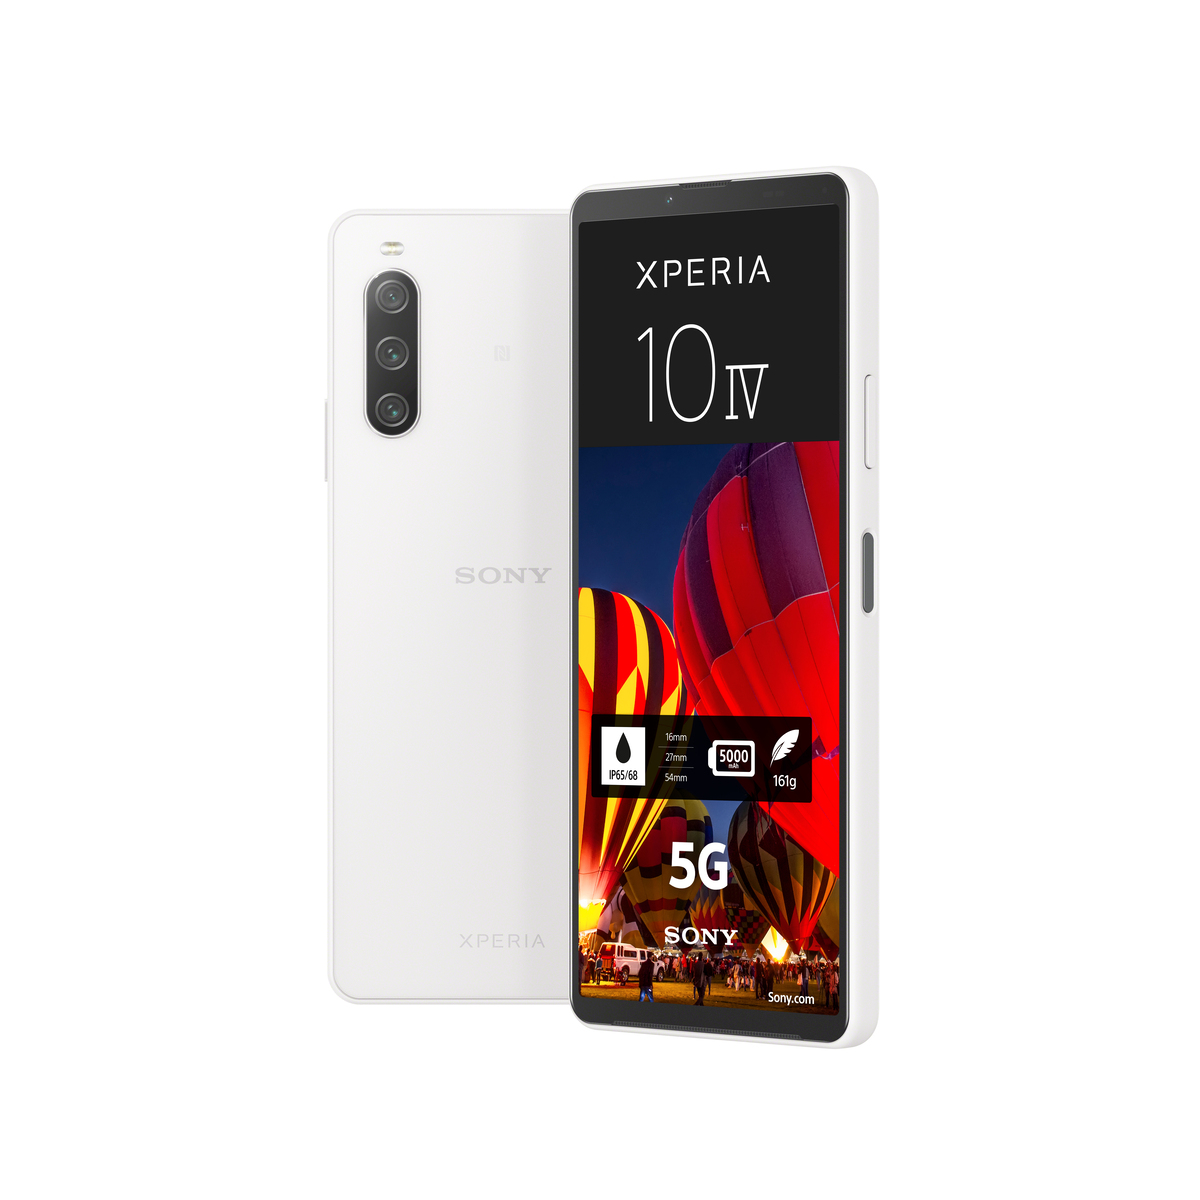 IV Smartphone Handy 5G 10 Xperia 128GB white